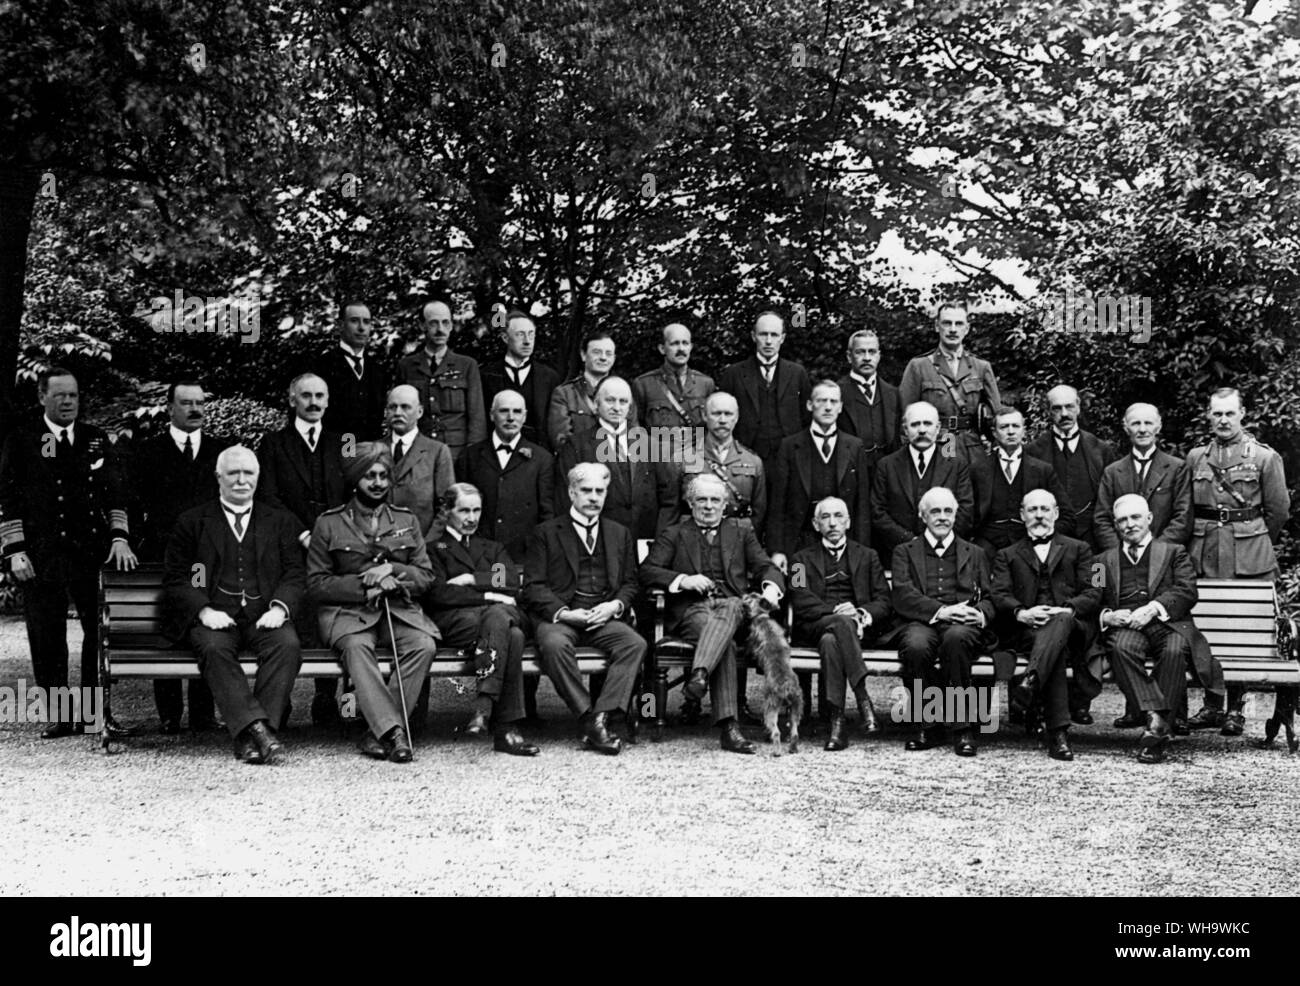 WW1/Imperial War Cabinet, die Downing Street, 1918:. Top, l-r: Sir W. Wehr; Gen. Sykes; Kol. G. Lambert; Kol. Amery; Oberstleutnant Sir Maurice Hankey; Hon. A. Meighen; Sir S.P. Sinha; Oberst Storr.. Mittlere Reihe, l-r: Sir Rosslyn Wemyss; Sir Joseph Ward; Hon. M.W. Rowell; Herr Walter Lang; Herr G.N. Barnes; Lord Curzon; Gen. Smuts; Herr Austin Chamberlain; Hon. J.A. Calder; Hon. H. Burton; Herr E.S Montagu; Sir Joseph Maclay; Gen. Sir G.M. Macdonah.. Vordere Reihe, l-r: Herr W. F. Massey; Der Maharadscha von Patiala; Herr Bonar Law; Sir Robert Borden; Herr David Lloyd George; Herr W.M Hughes; Herr Balfour; Herr Stockfoto